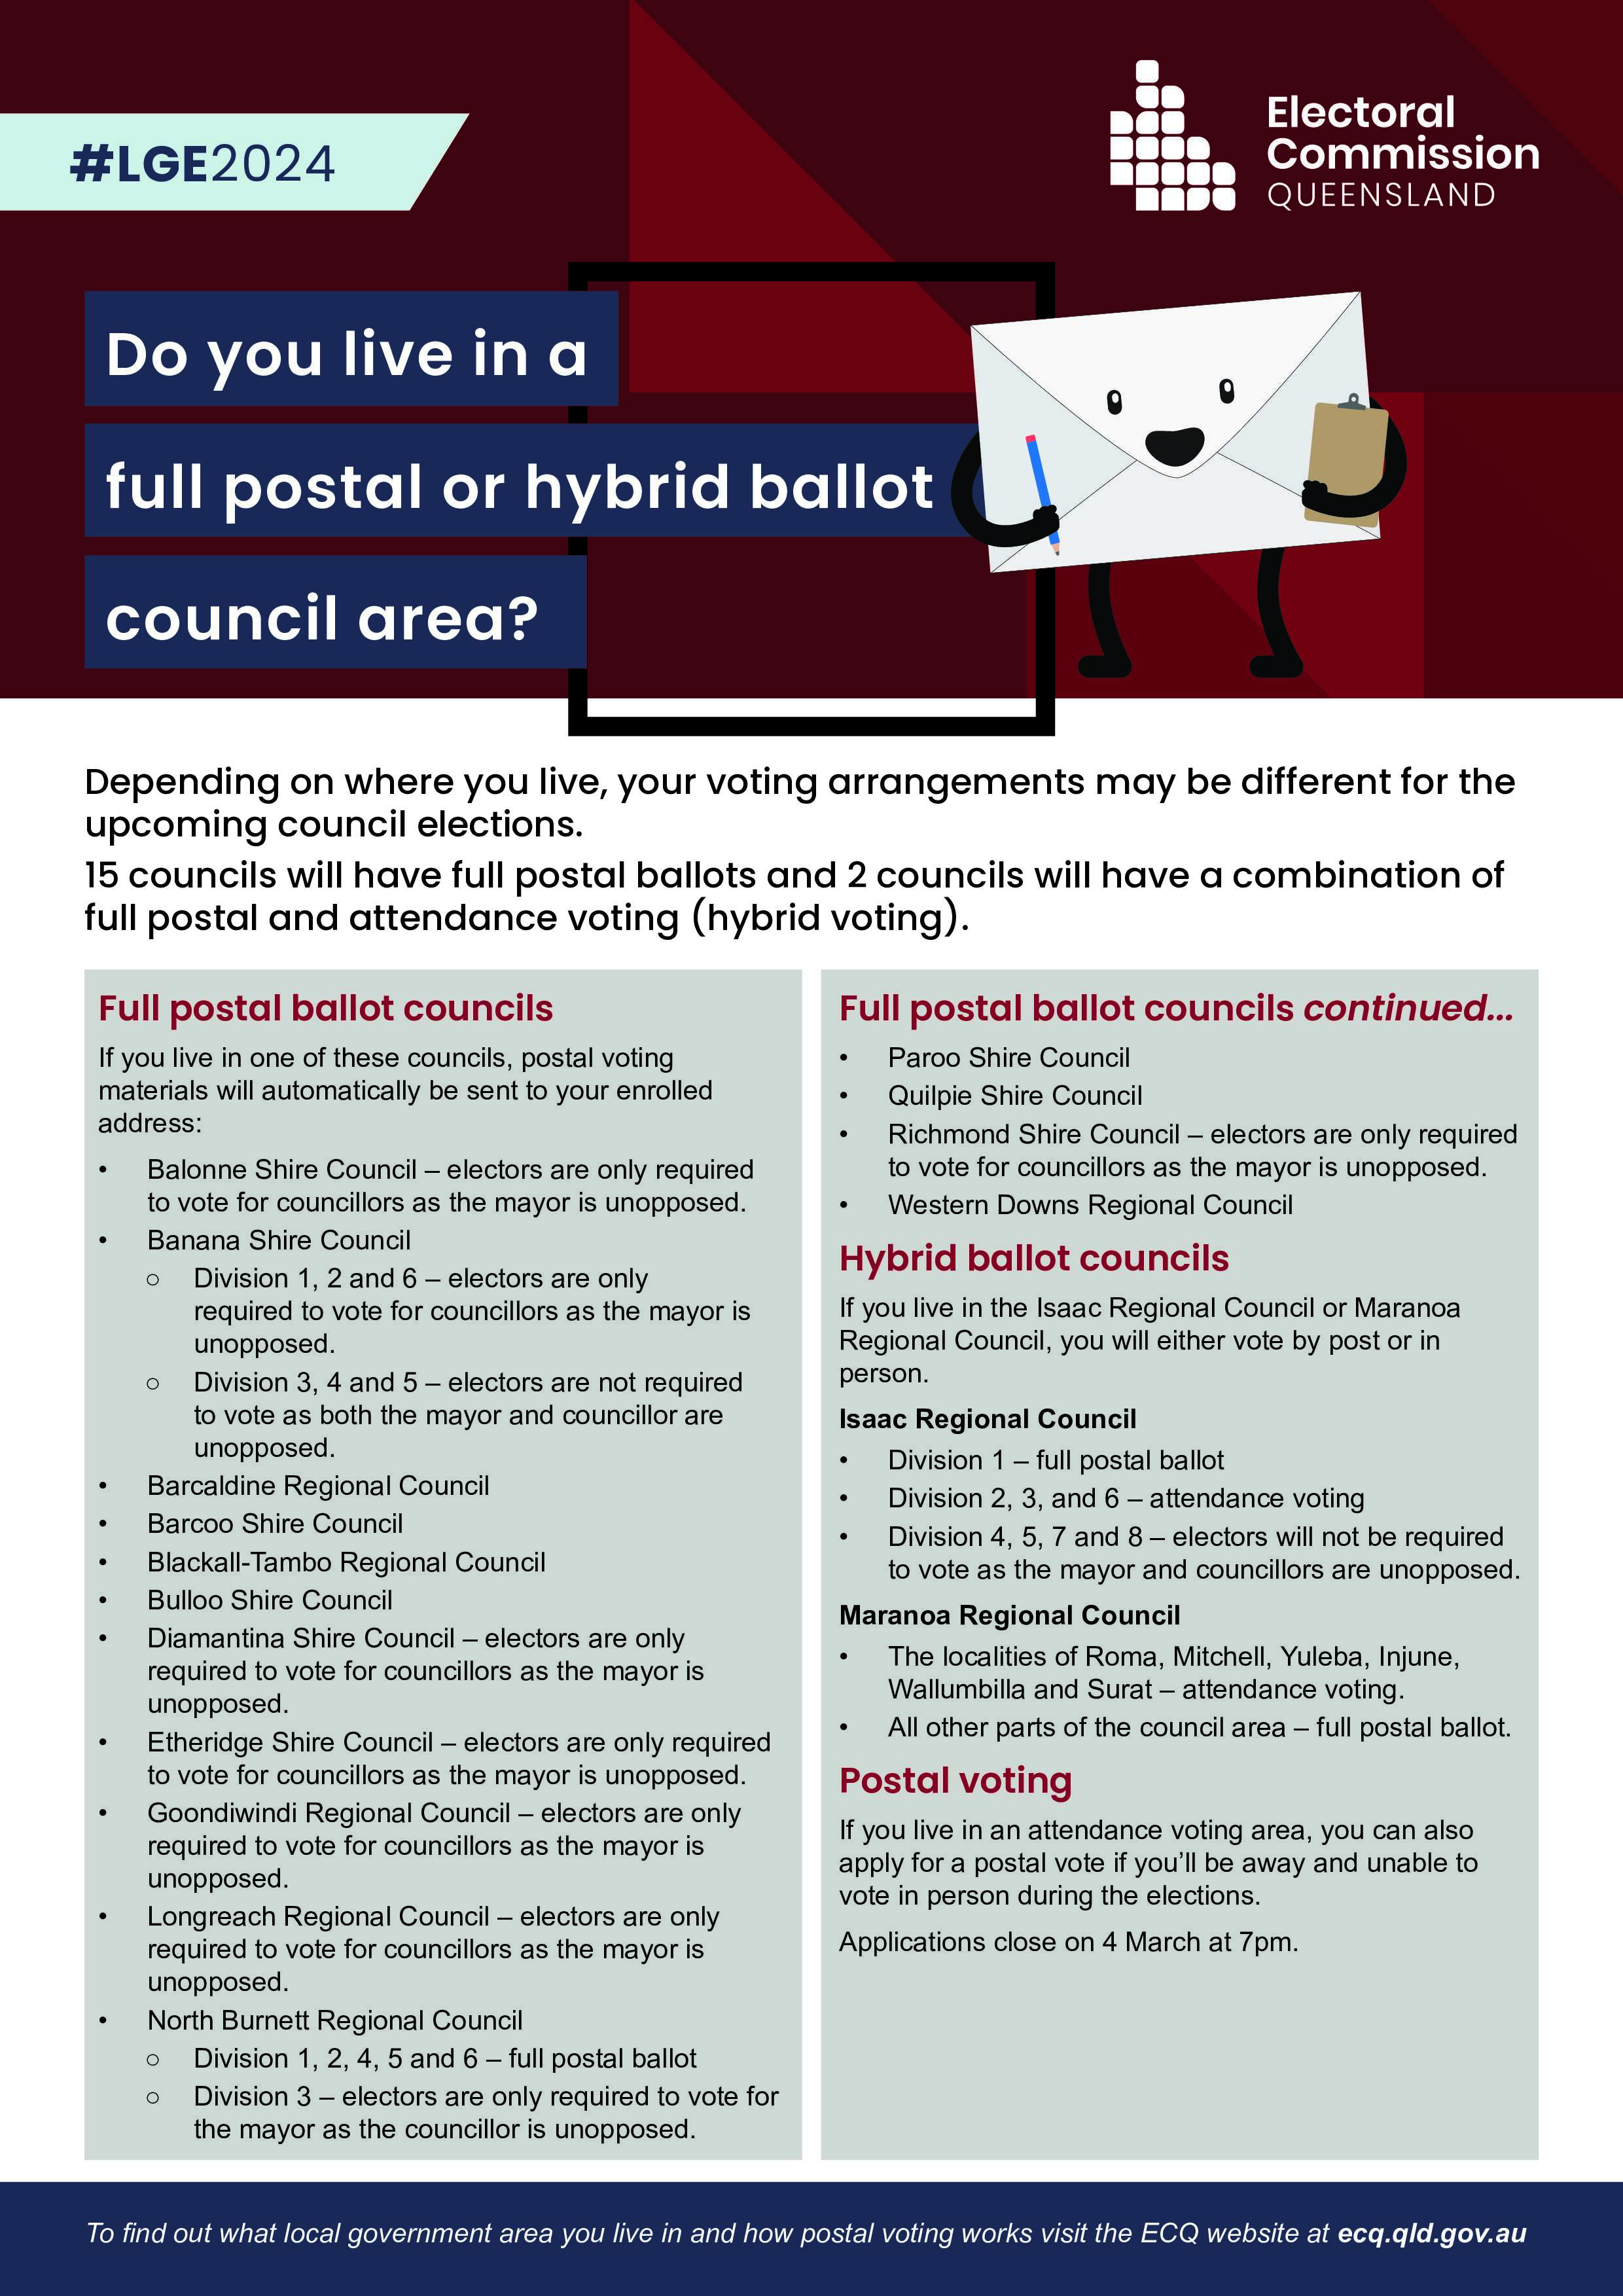 Full postal or hybrid councils